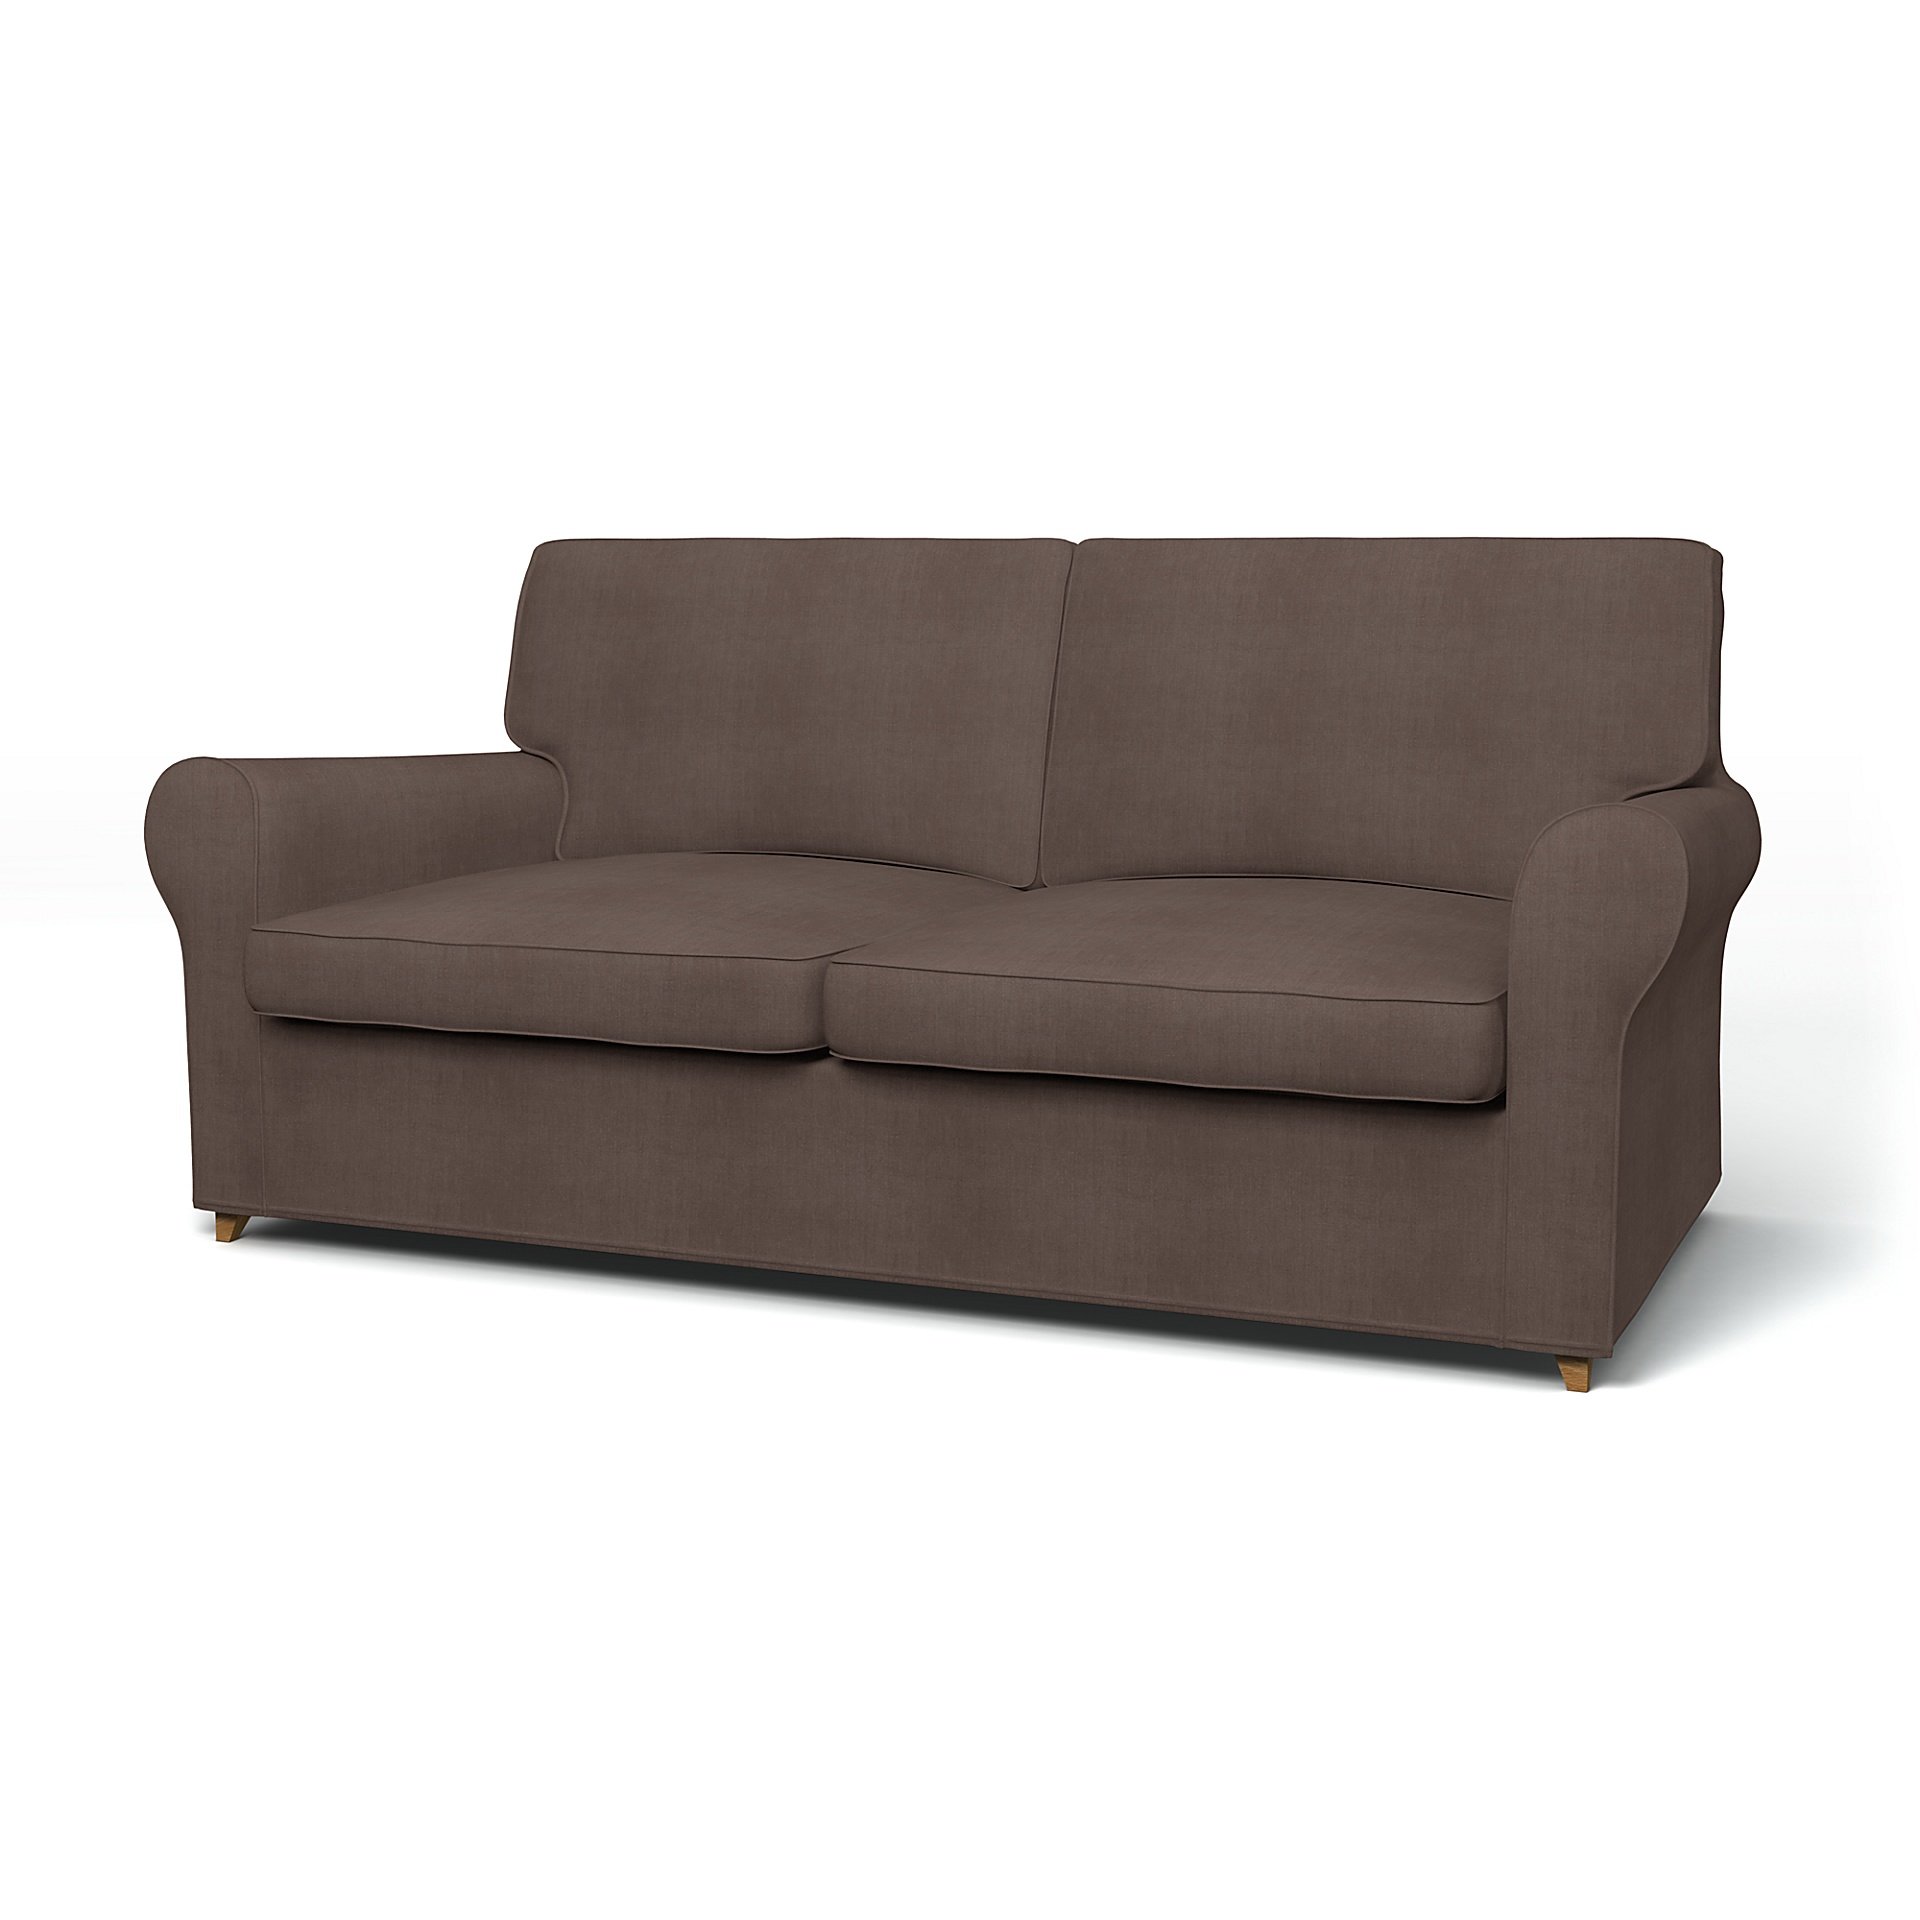 IKEA - Angby Sofa Bed Cover, Cocoa, Linen - Bemz